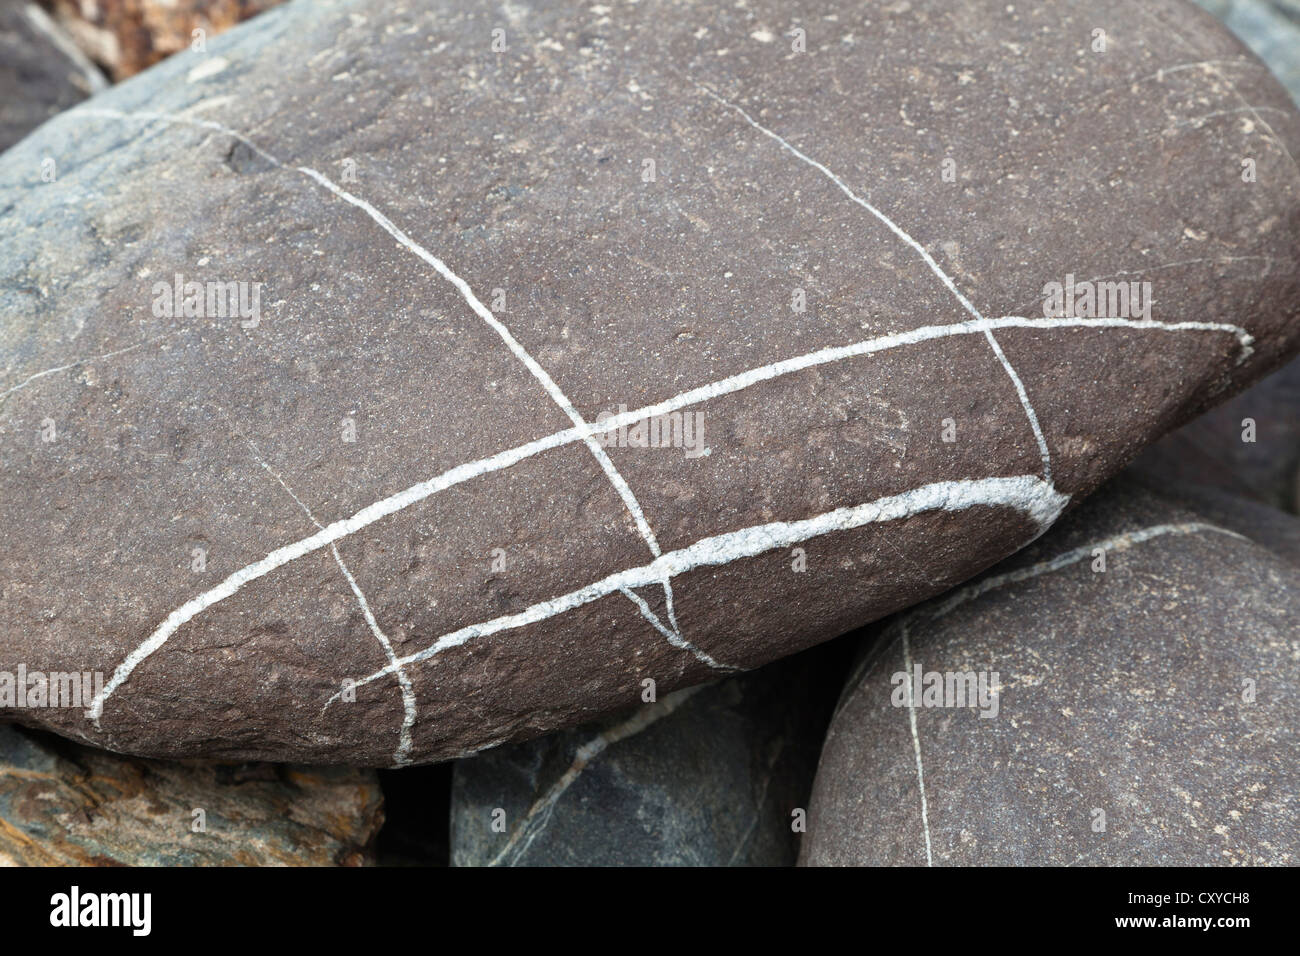 Rock with seams of quartz, Atlantic coast, Portugal, Europe Stock Photo